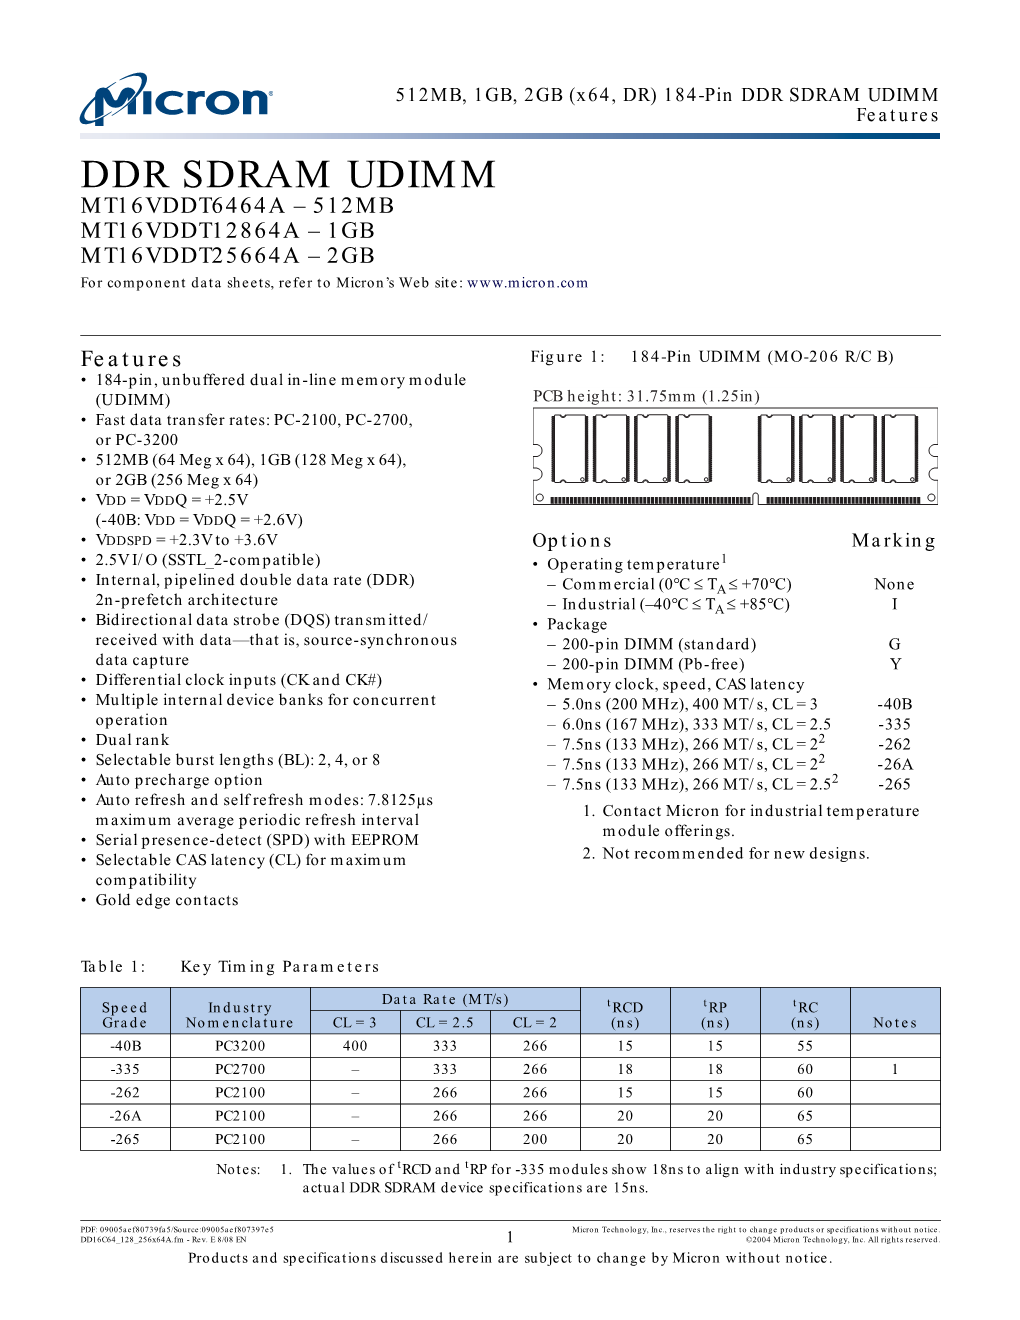 DDR SDRAM UDIMM 184-Pin, 512MB, 1GB, 2GB X64, DR Data Sheet